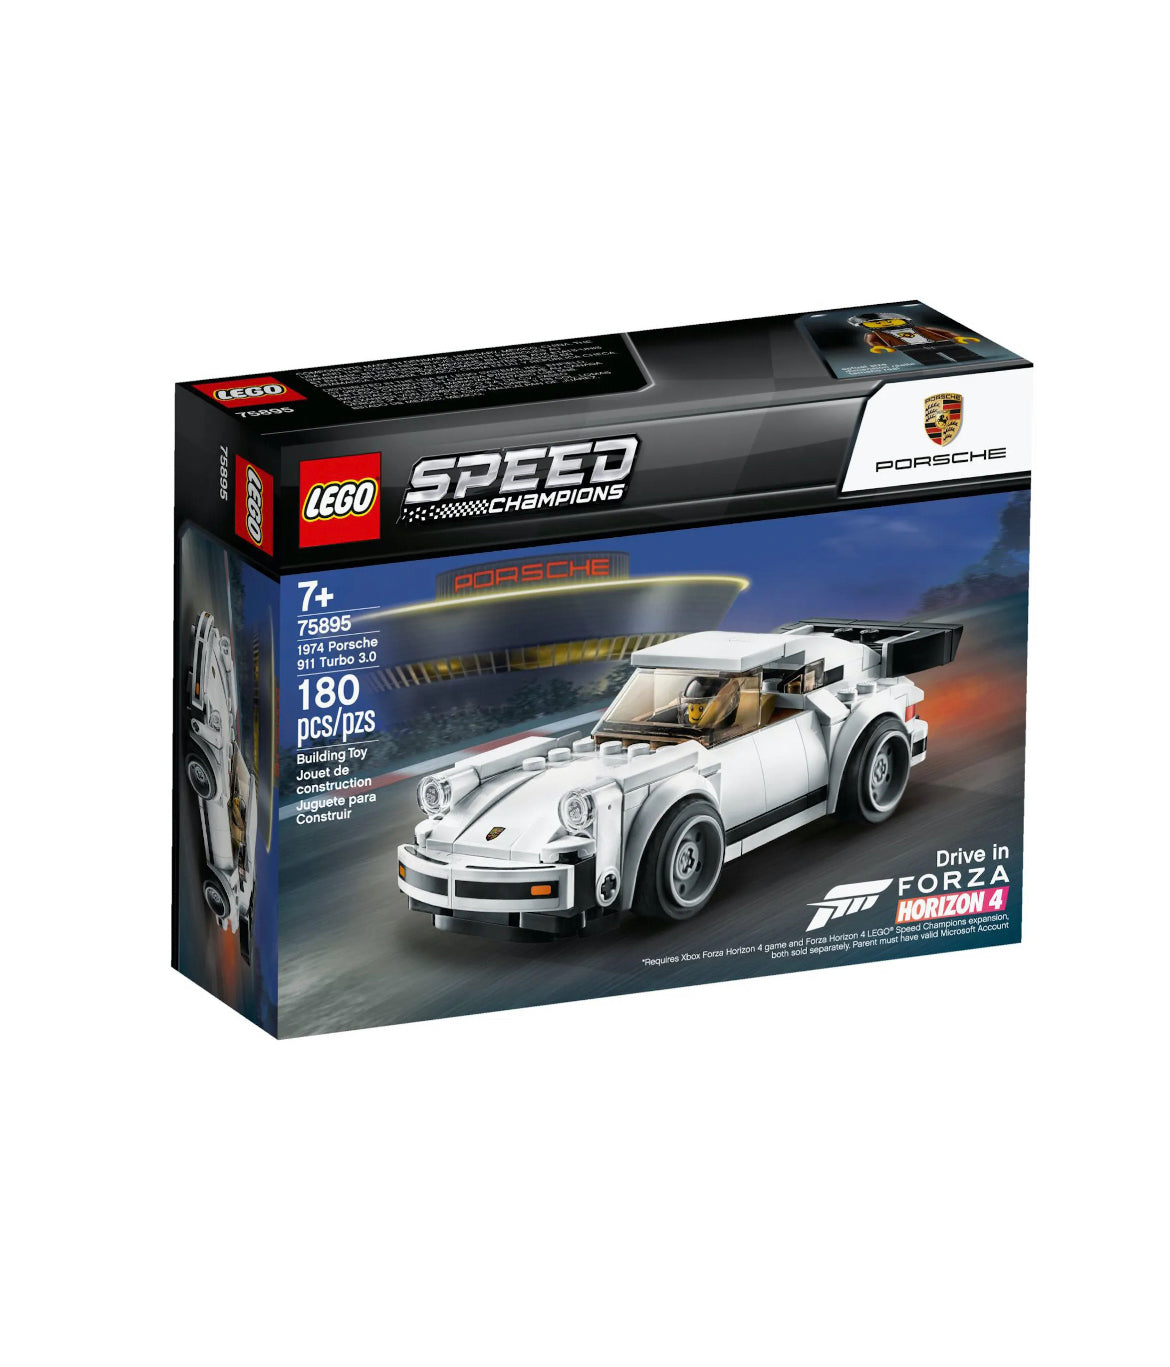 Lego Speed Champions ‘1974 Porsche Turbo 3’ Set 75895